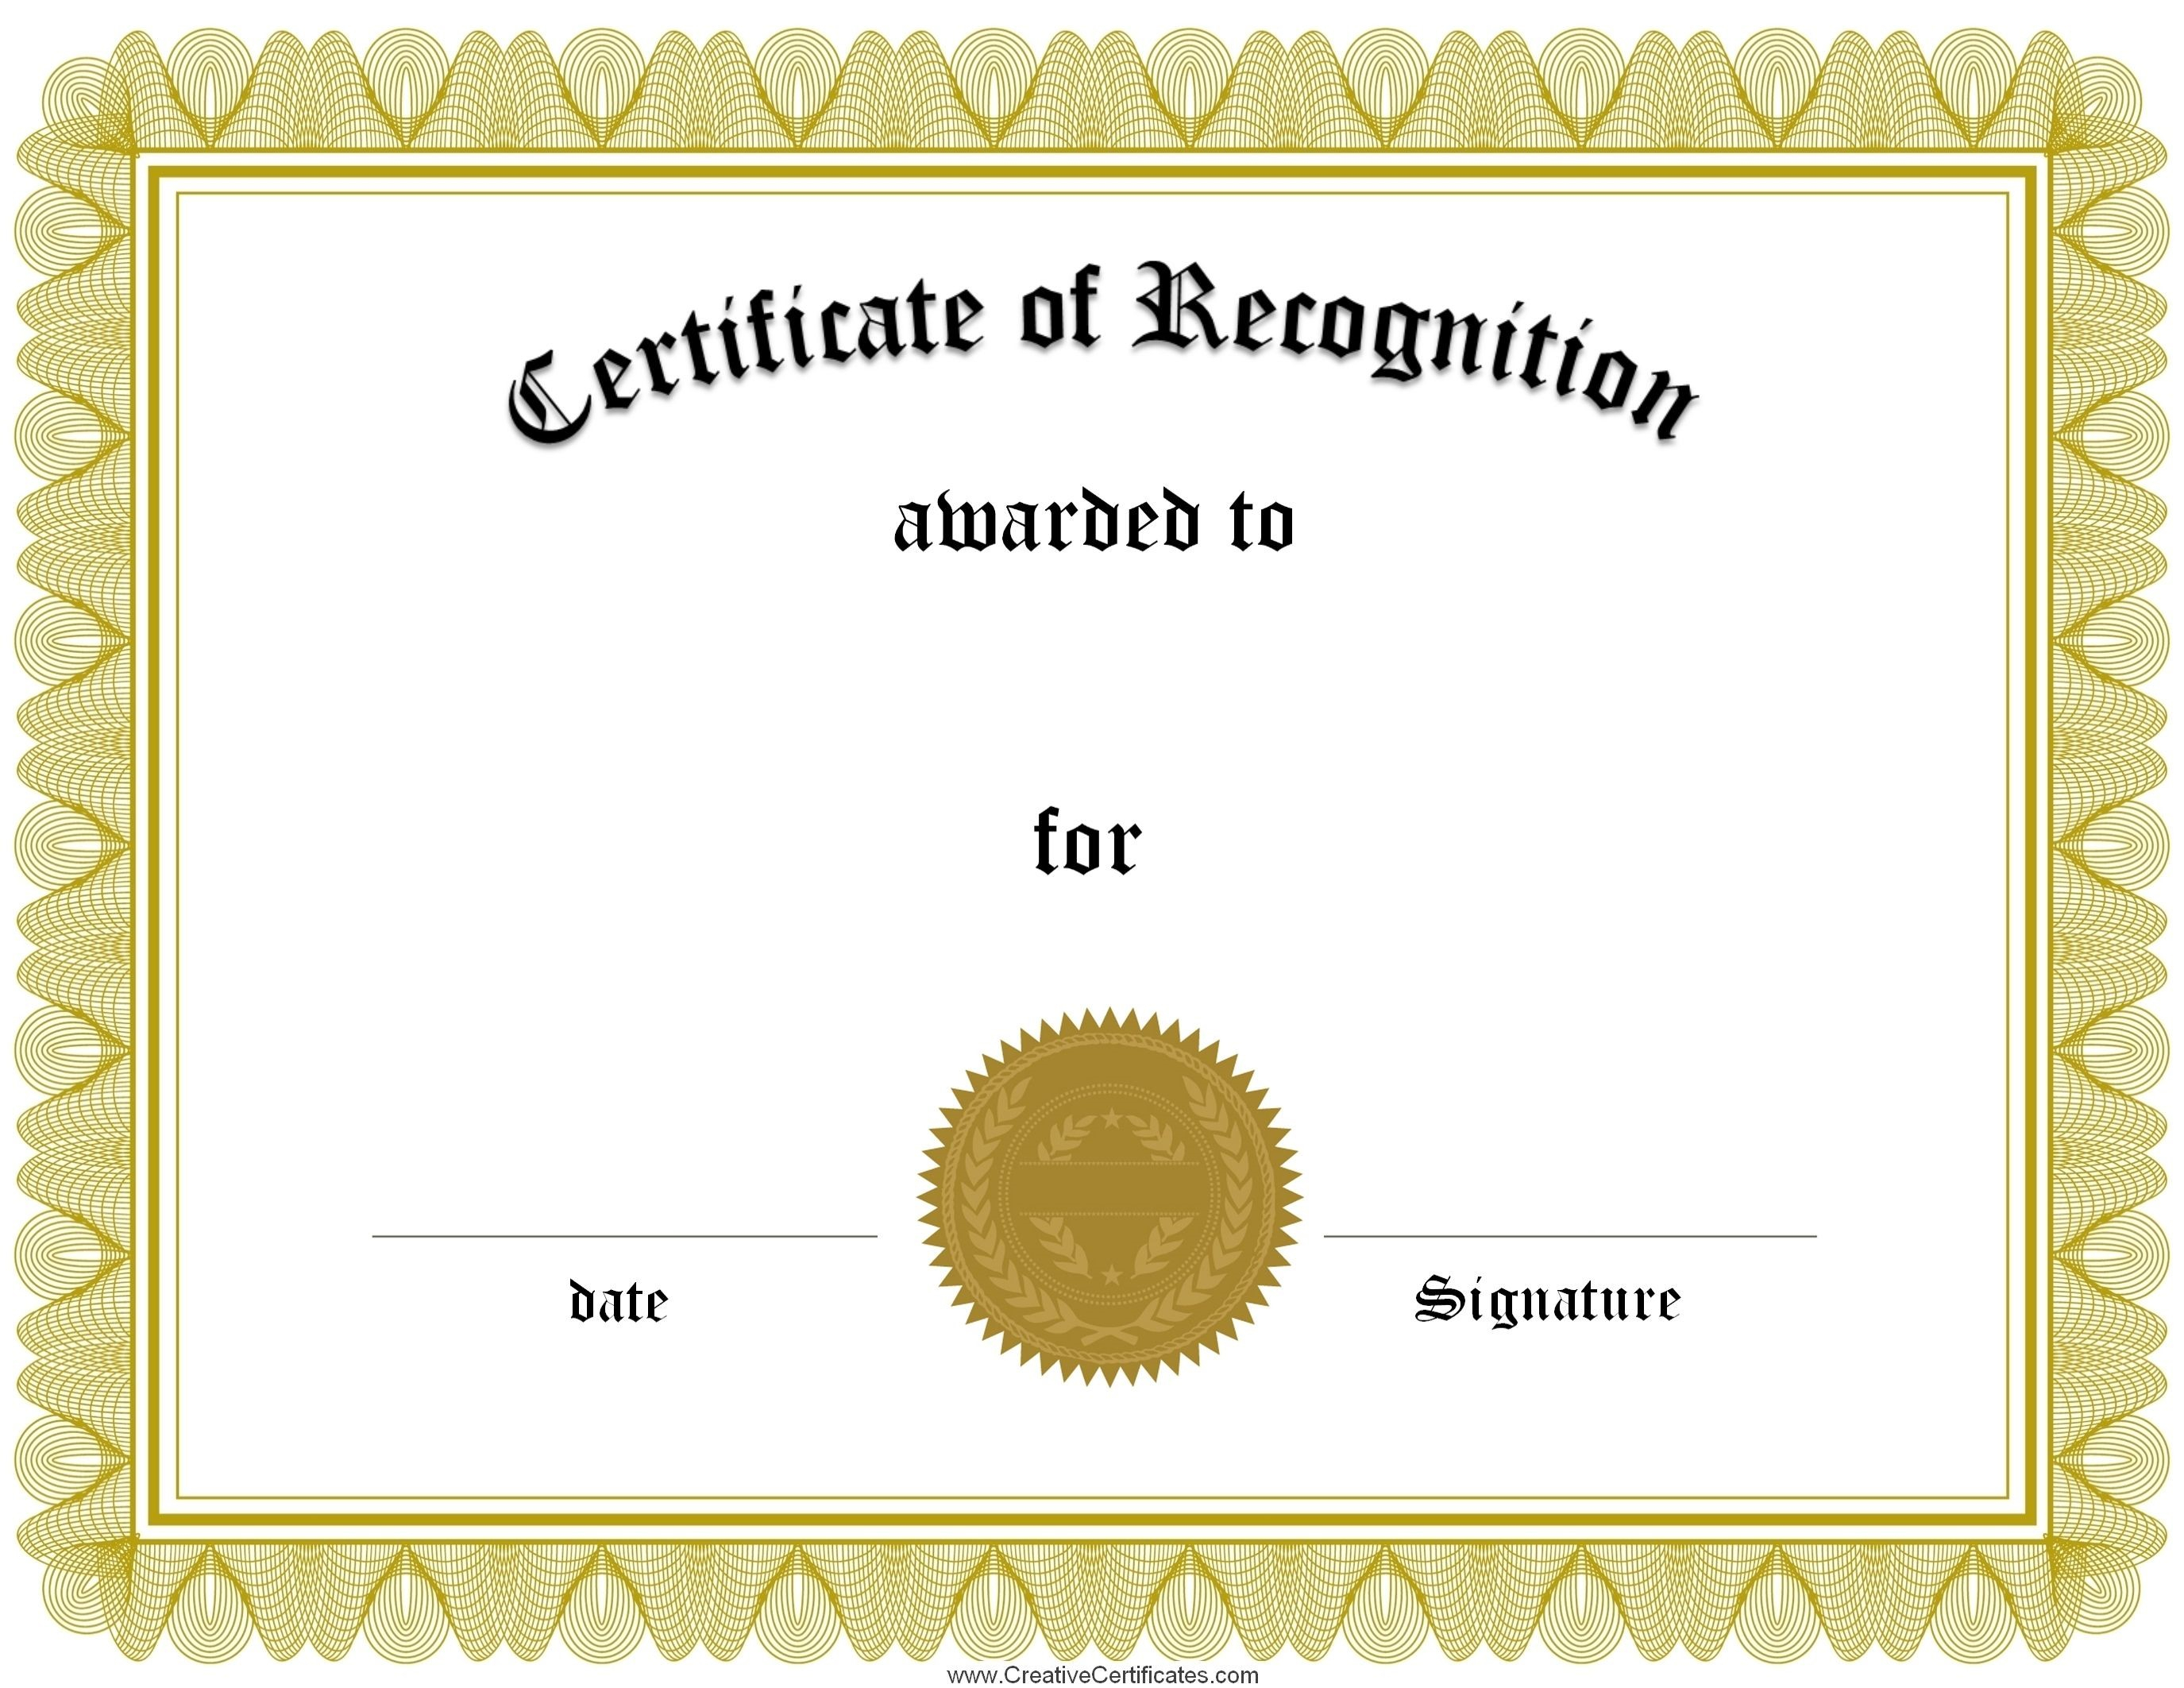 Certificates. Inspiring Recognition Certificate Template With Template For Recognition Certificate